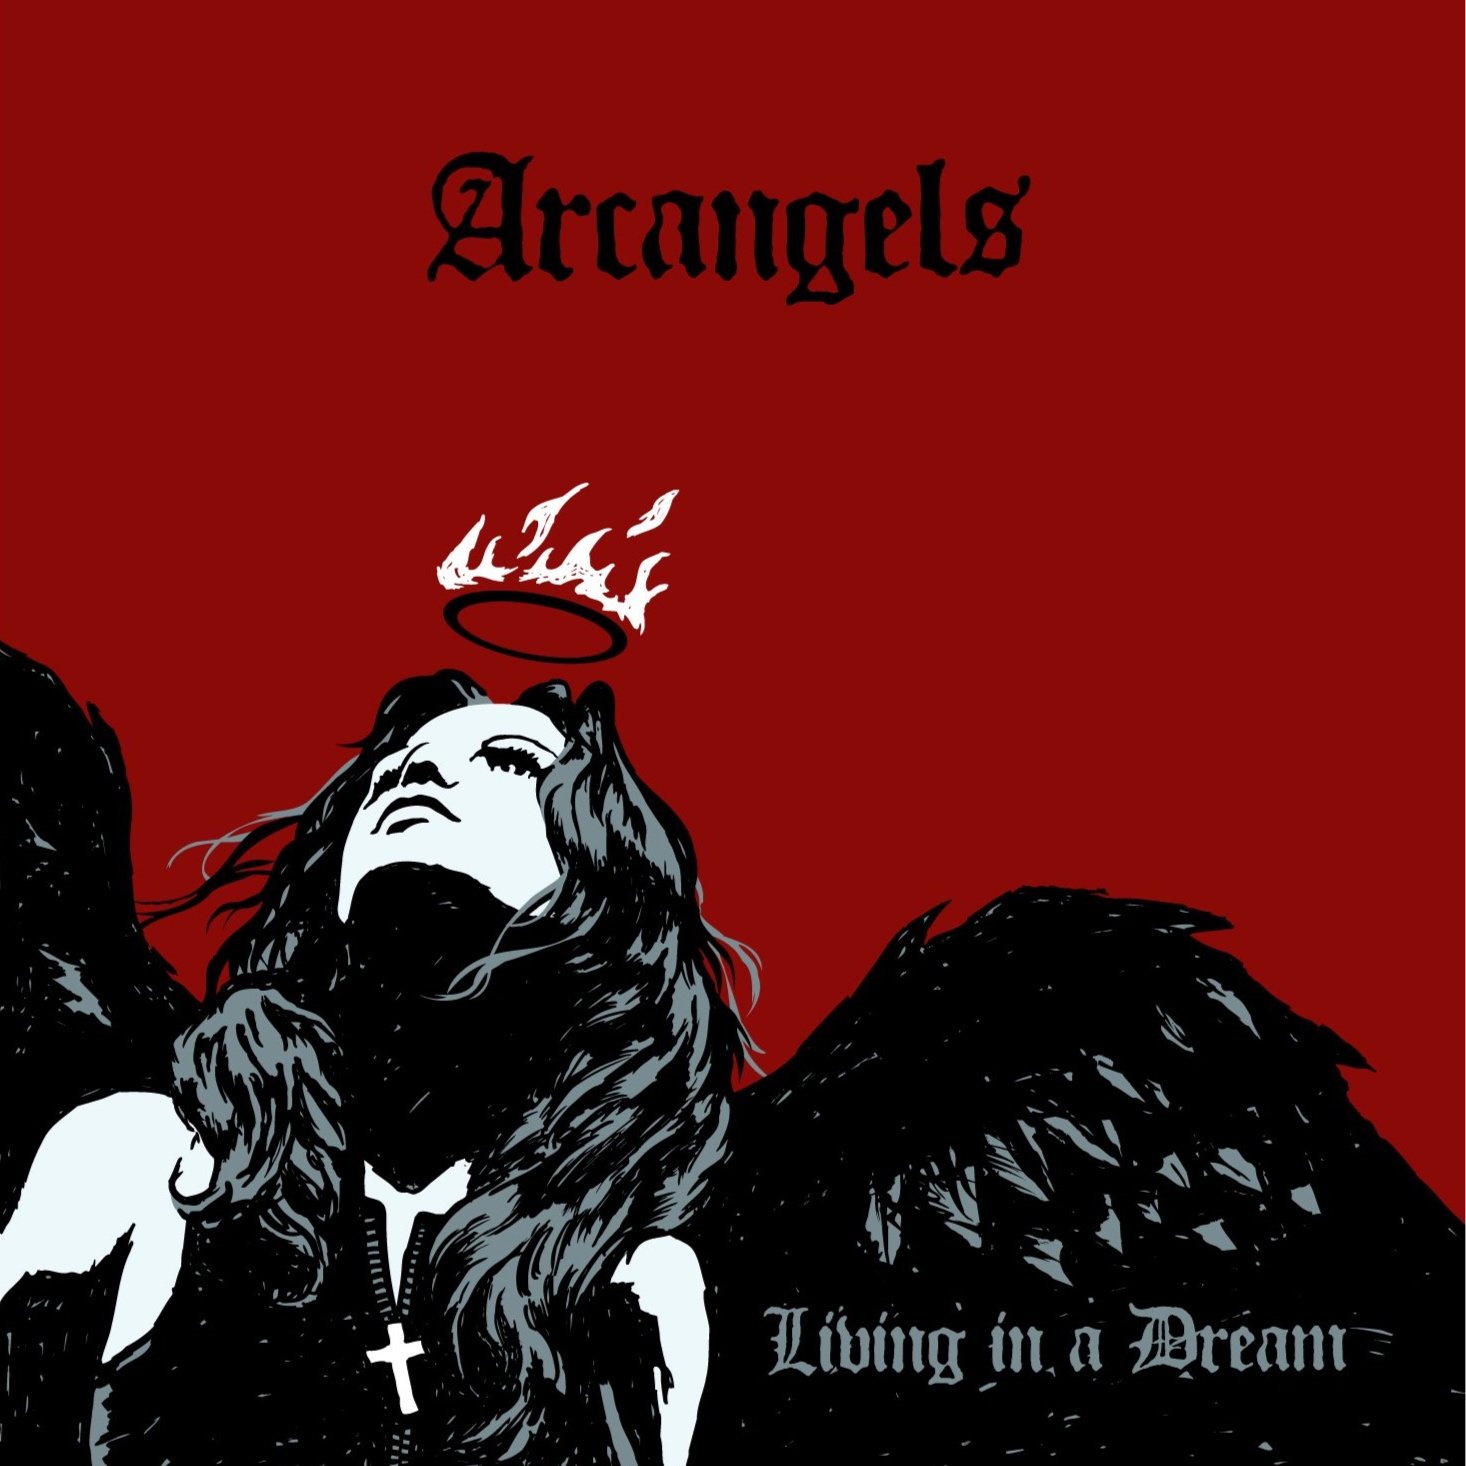 Arc Angels